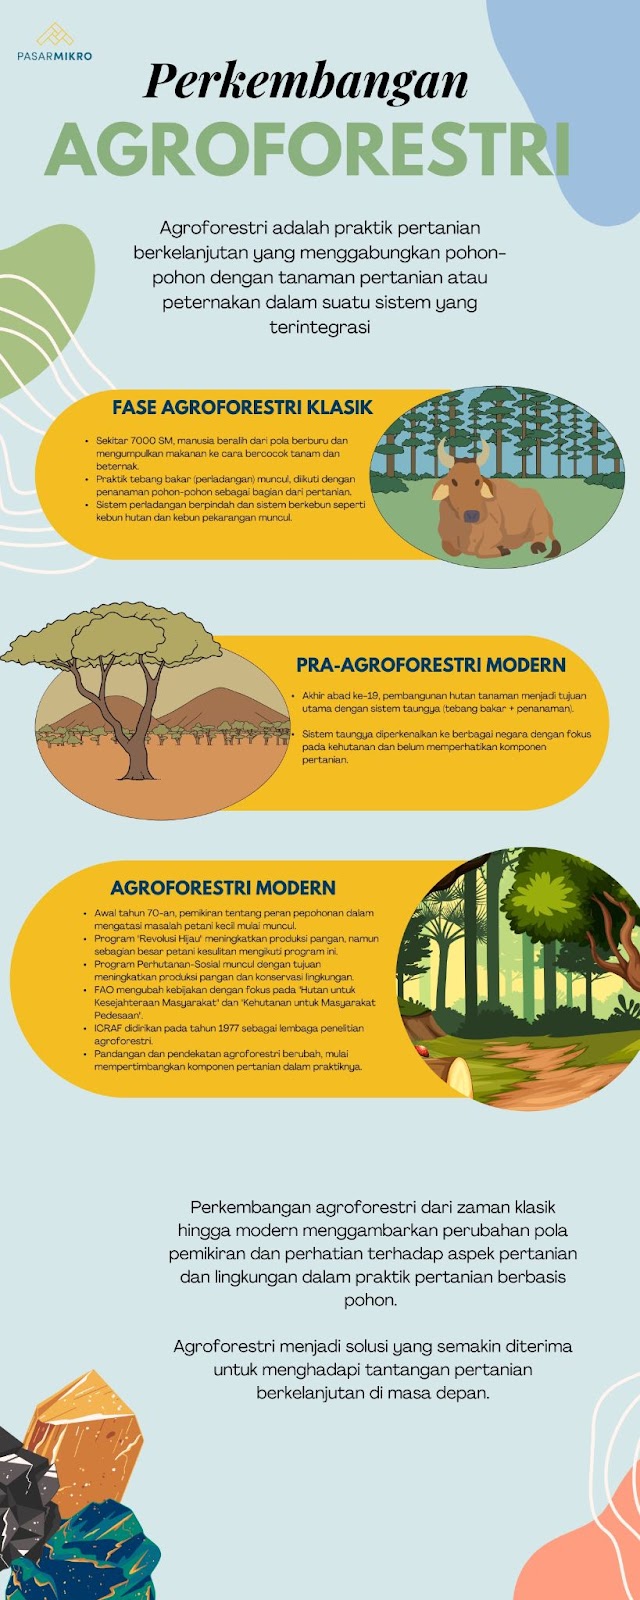 Sejarah Perkembangan Agroforestri